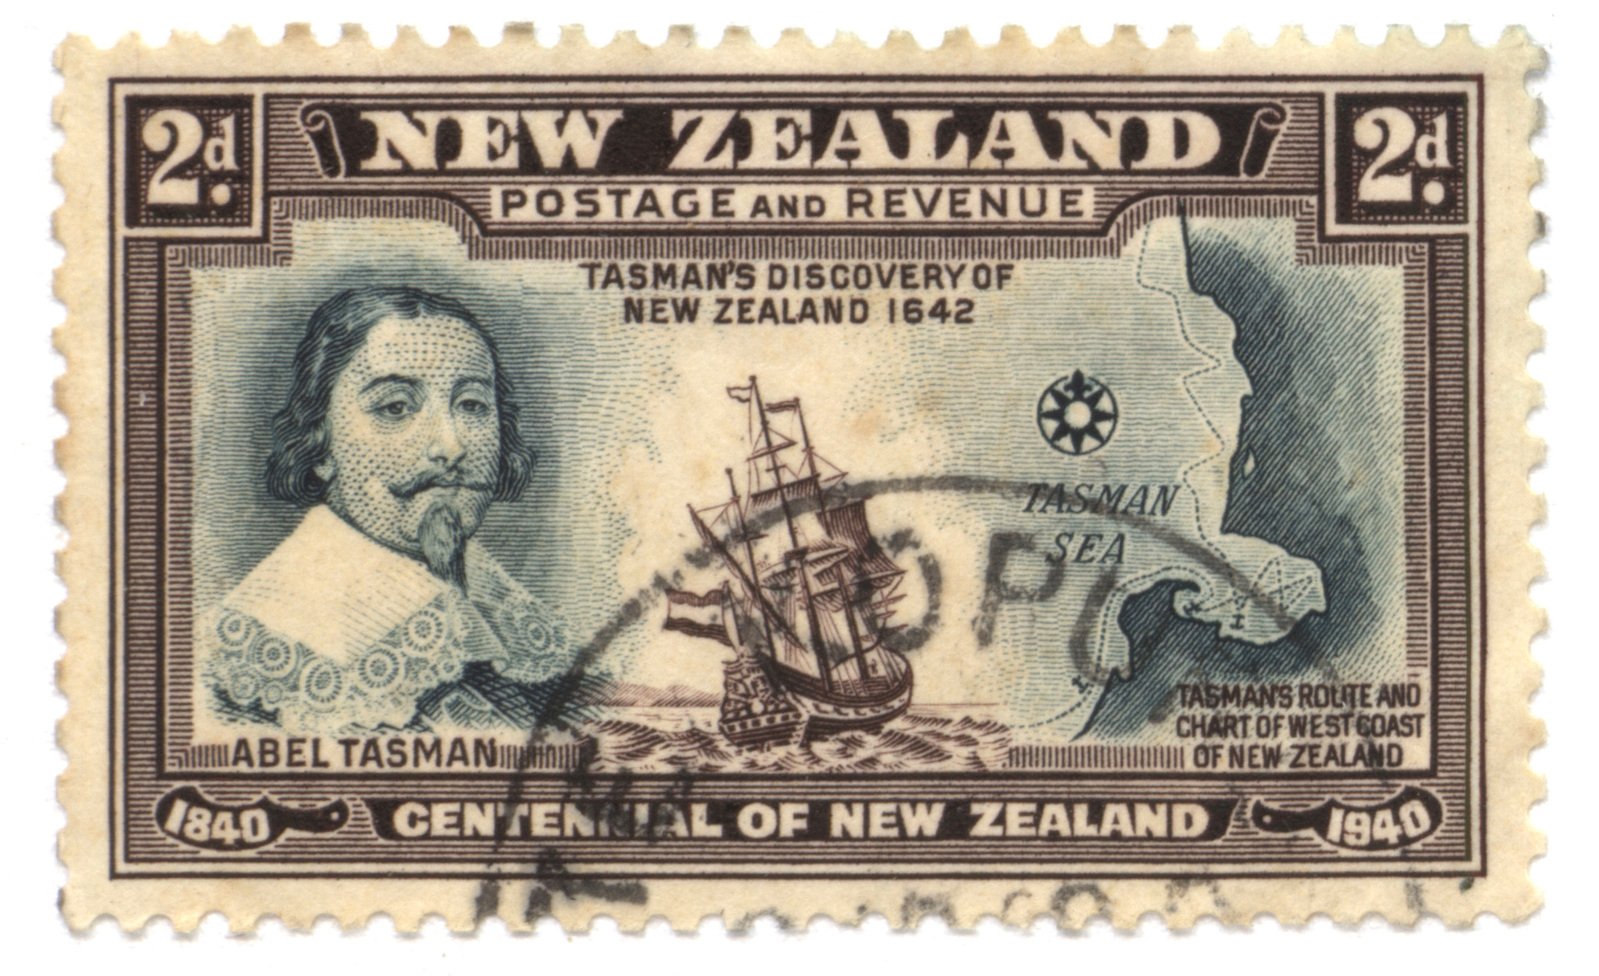 New Zealand postage